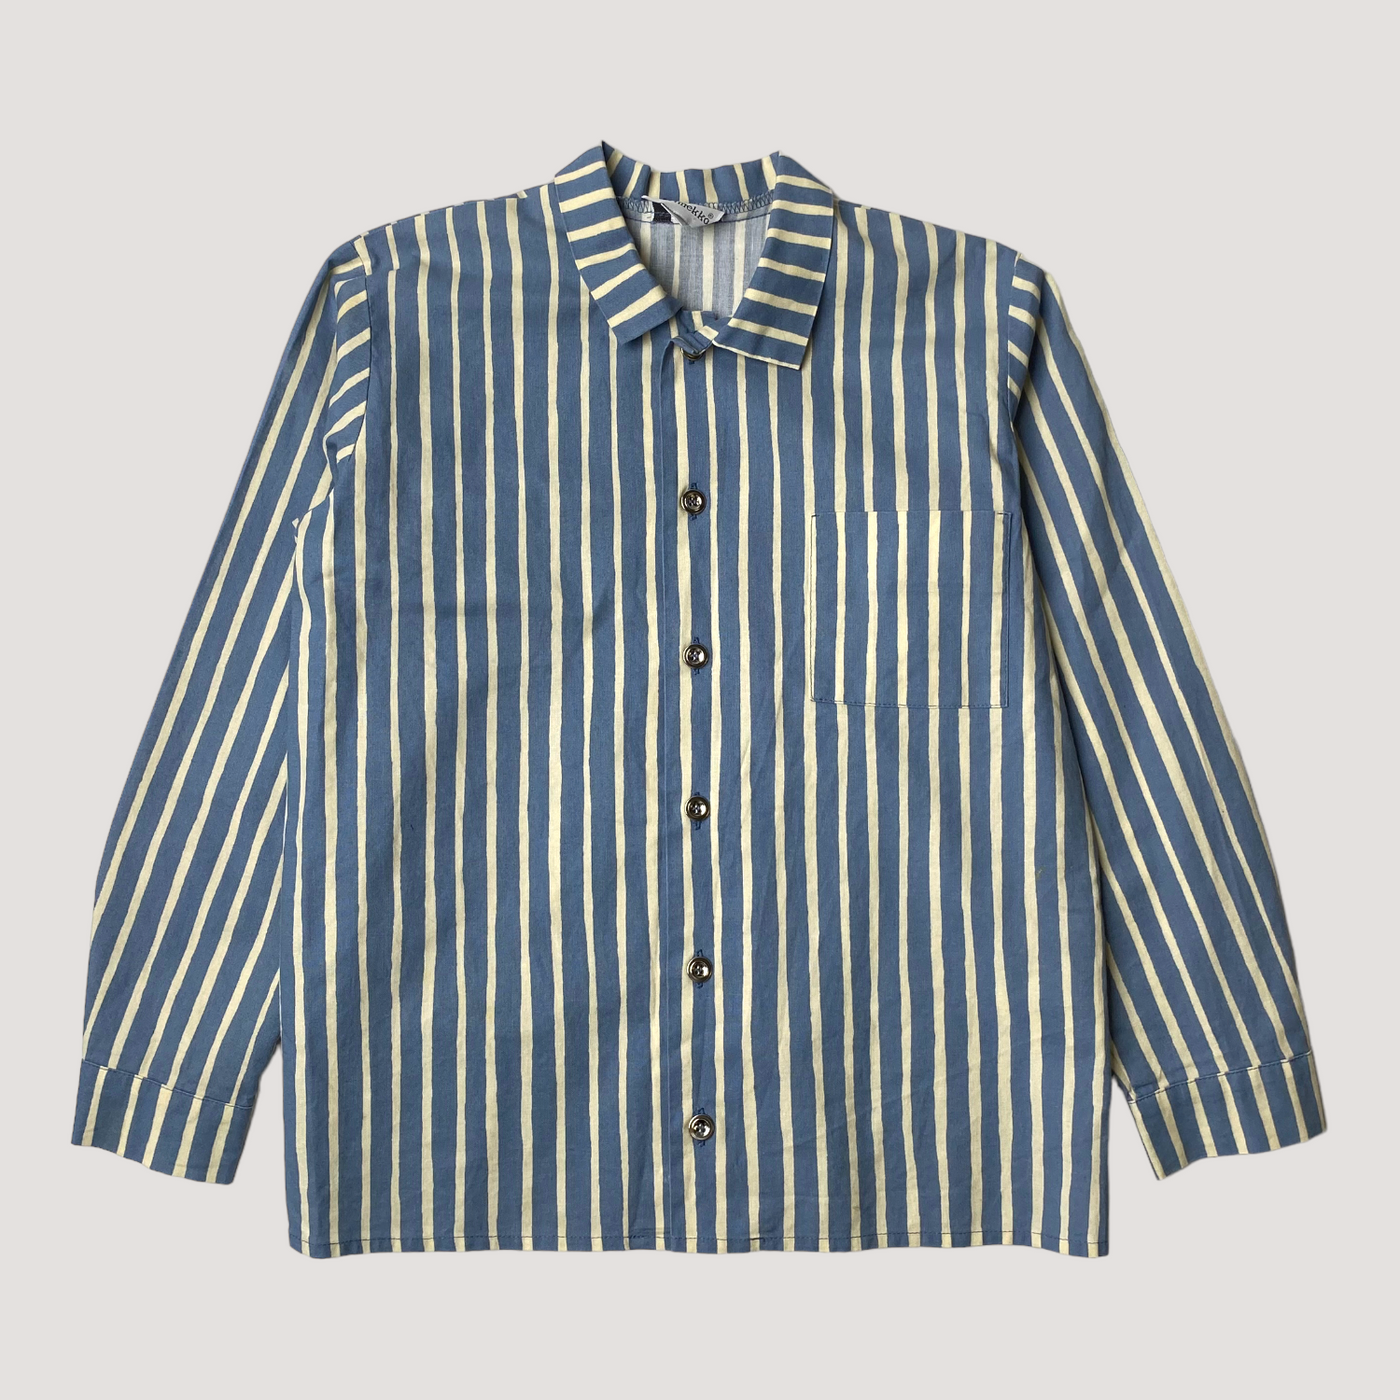 Marimekko jokapoika shirt, blue/white | 130cm